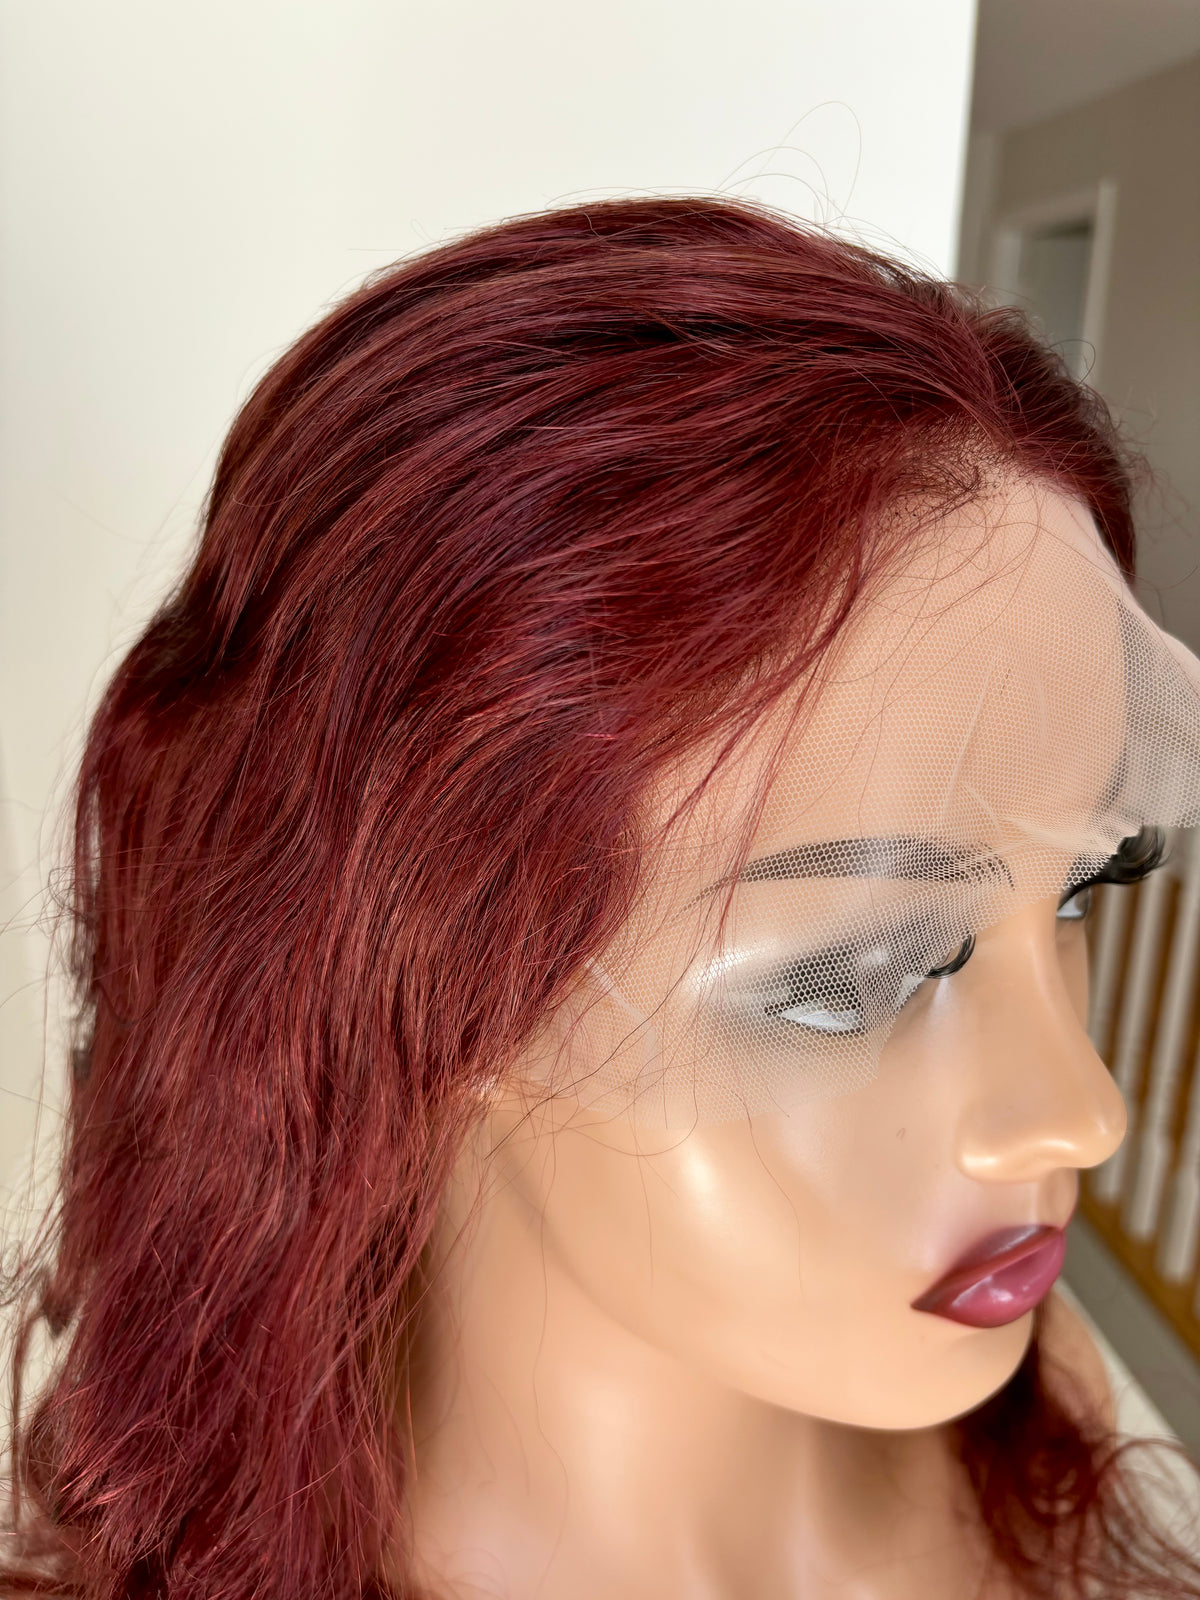 33# Reddish brown body wave wig human hair wig.